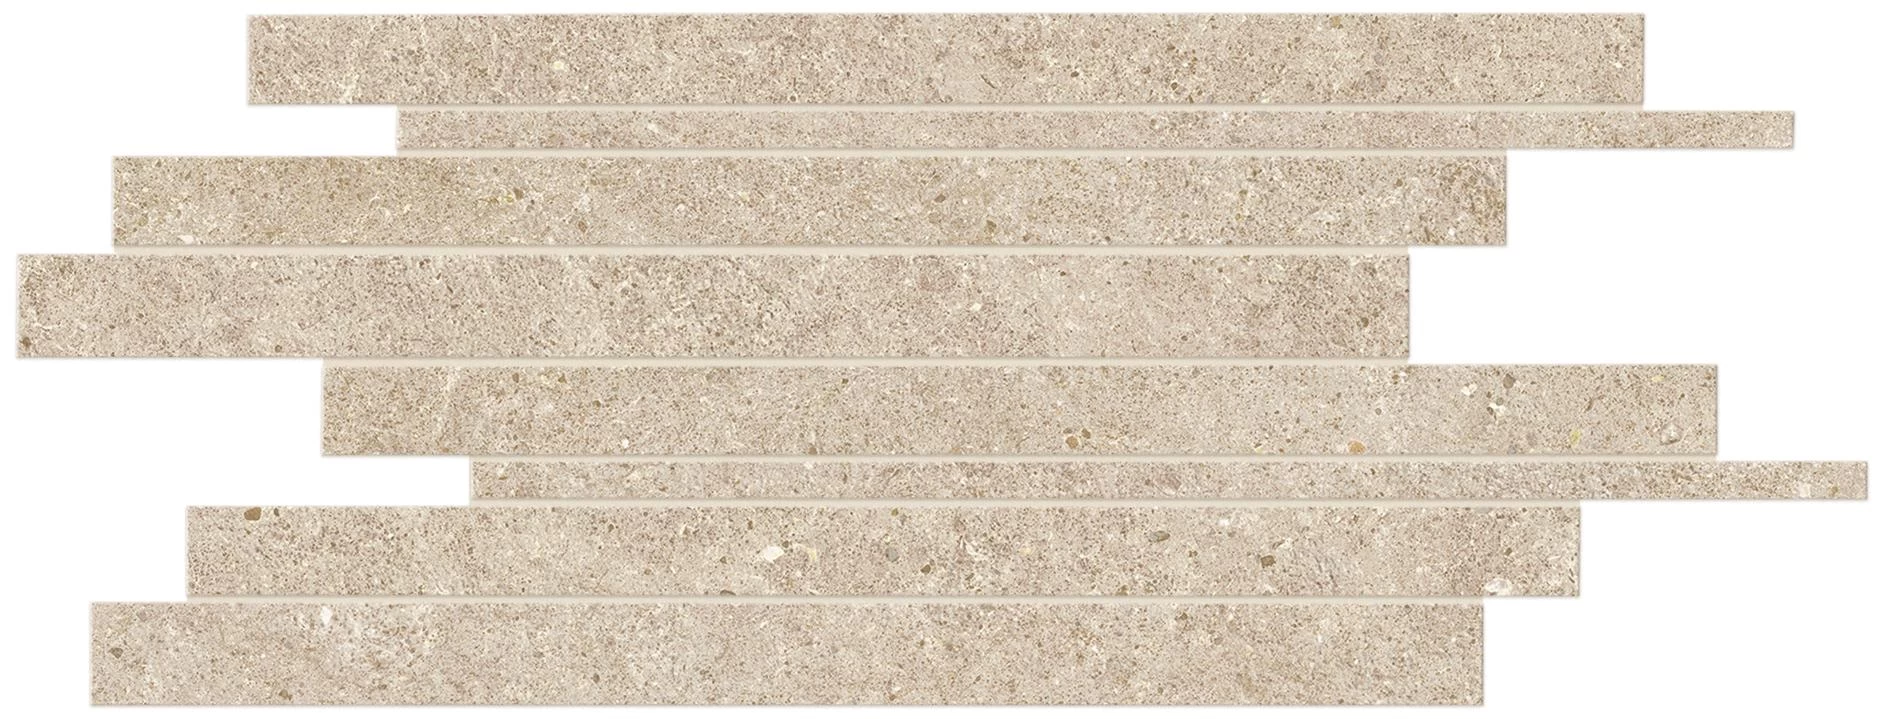 A7C5 Напольная Boost Stone Cream Mosaico Brick 30x60